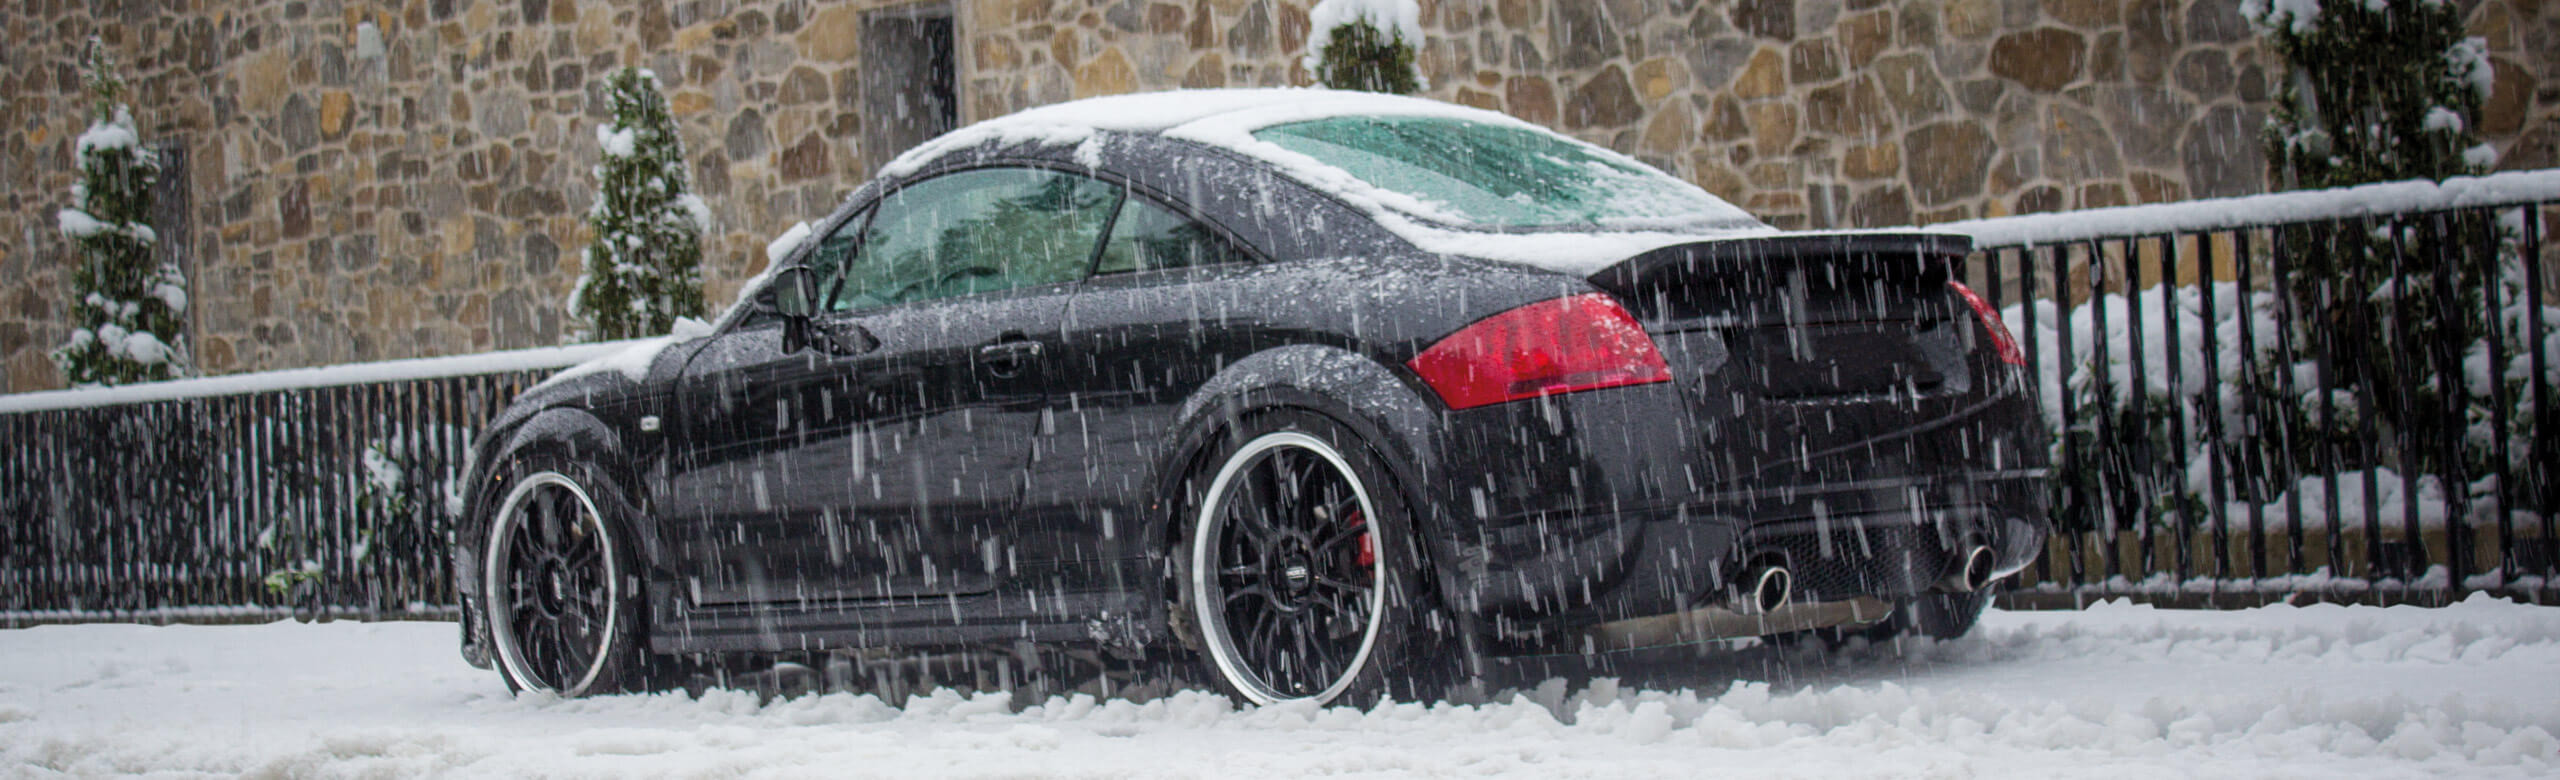 Werk 2 Automotive GmbH - ❄️ Winter is in coming ☃️ Audi TT